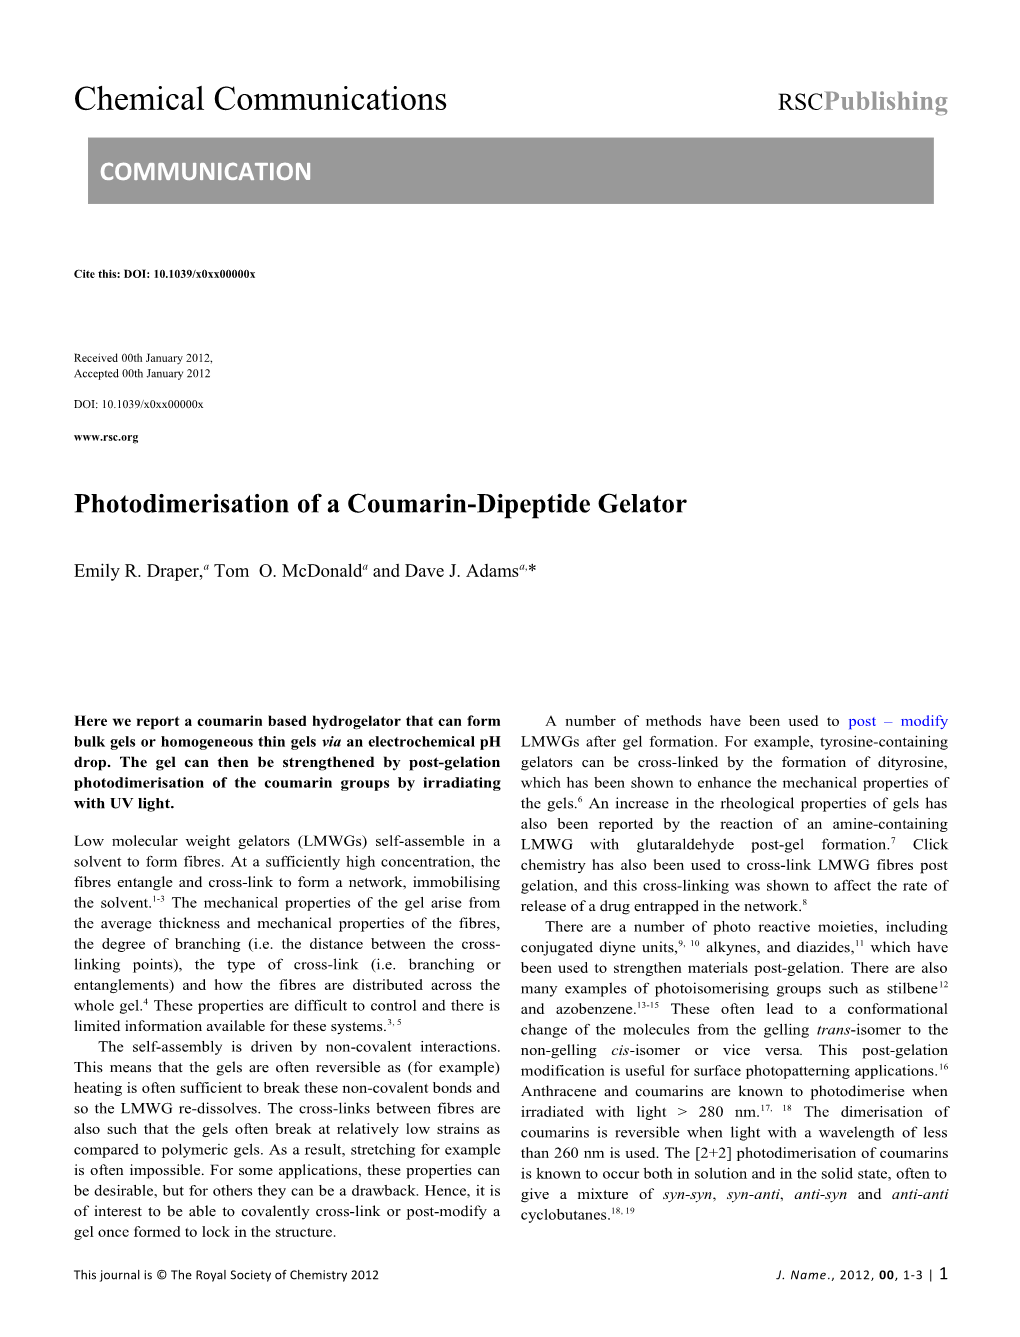 Photodimerisation of a Coumarin-Dipeptide Gelator